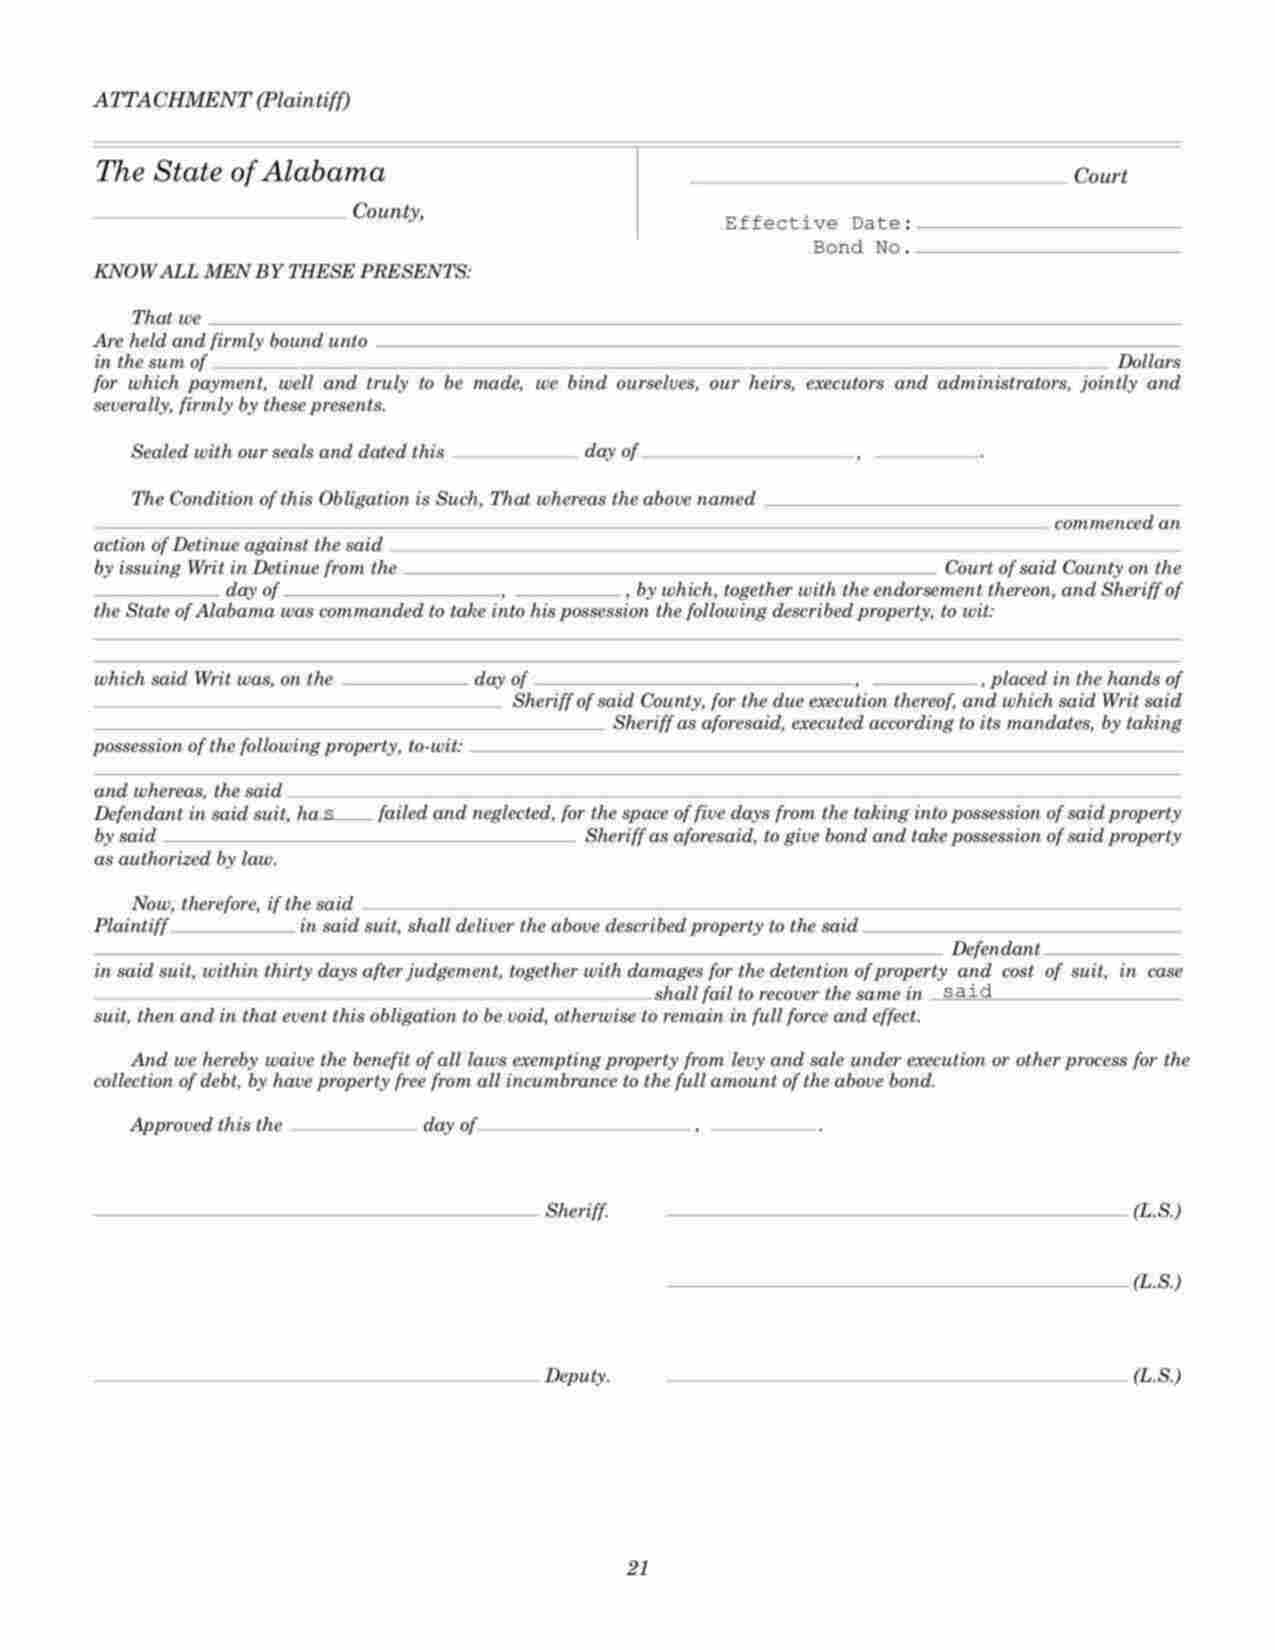 Alabama Plaintiffs Attachment in Detinue Bond Form